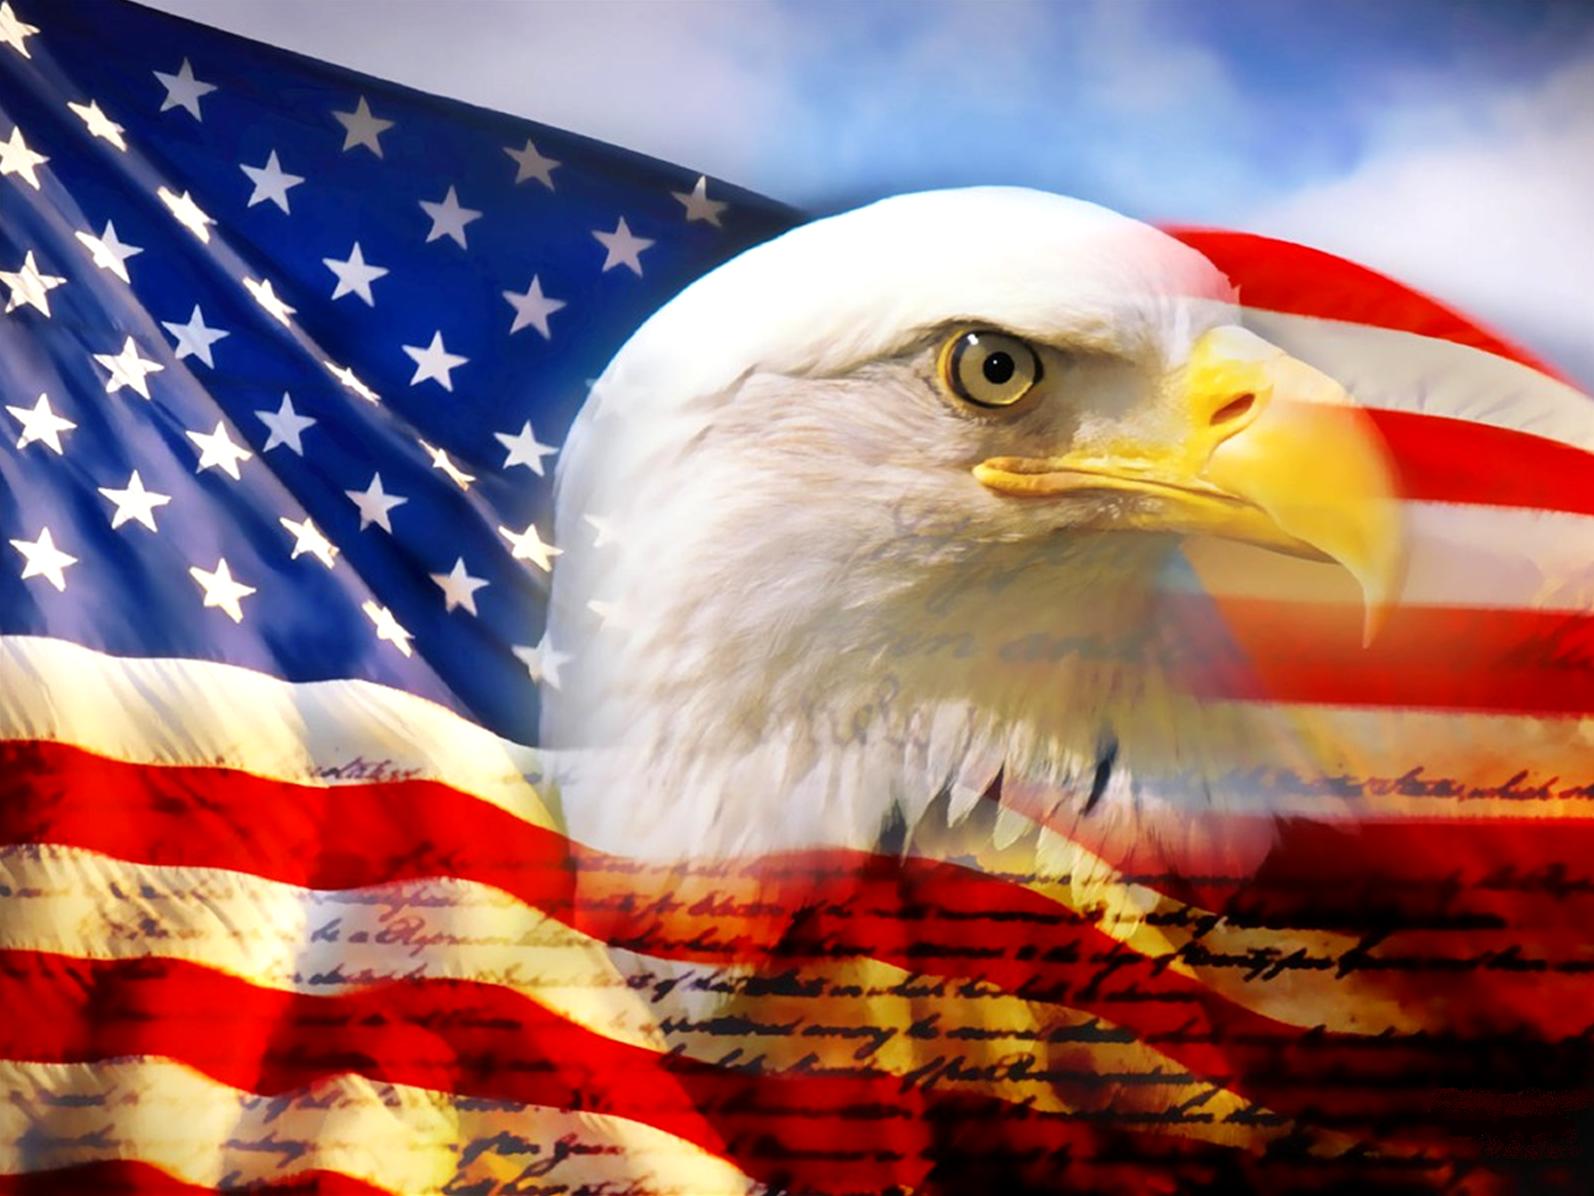 Web Wp Content Uploads American Patriotic Eagle Wallpaper Jpg